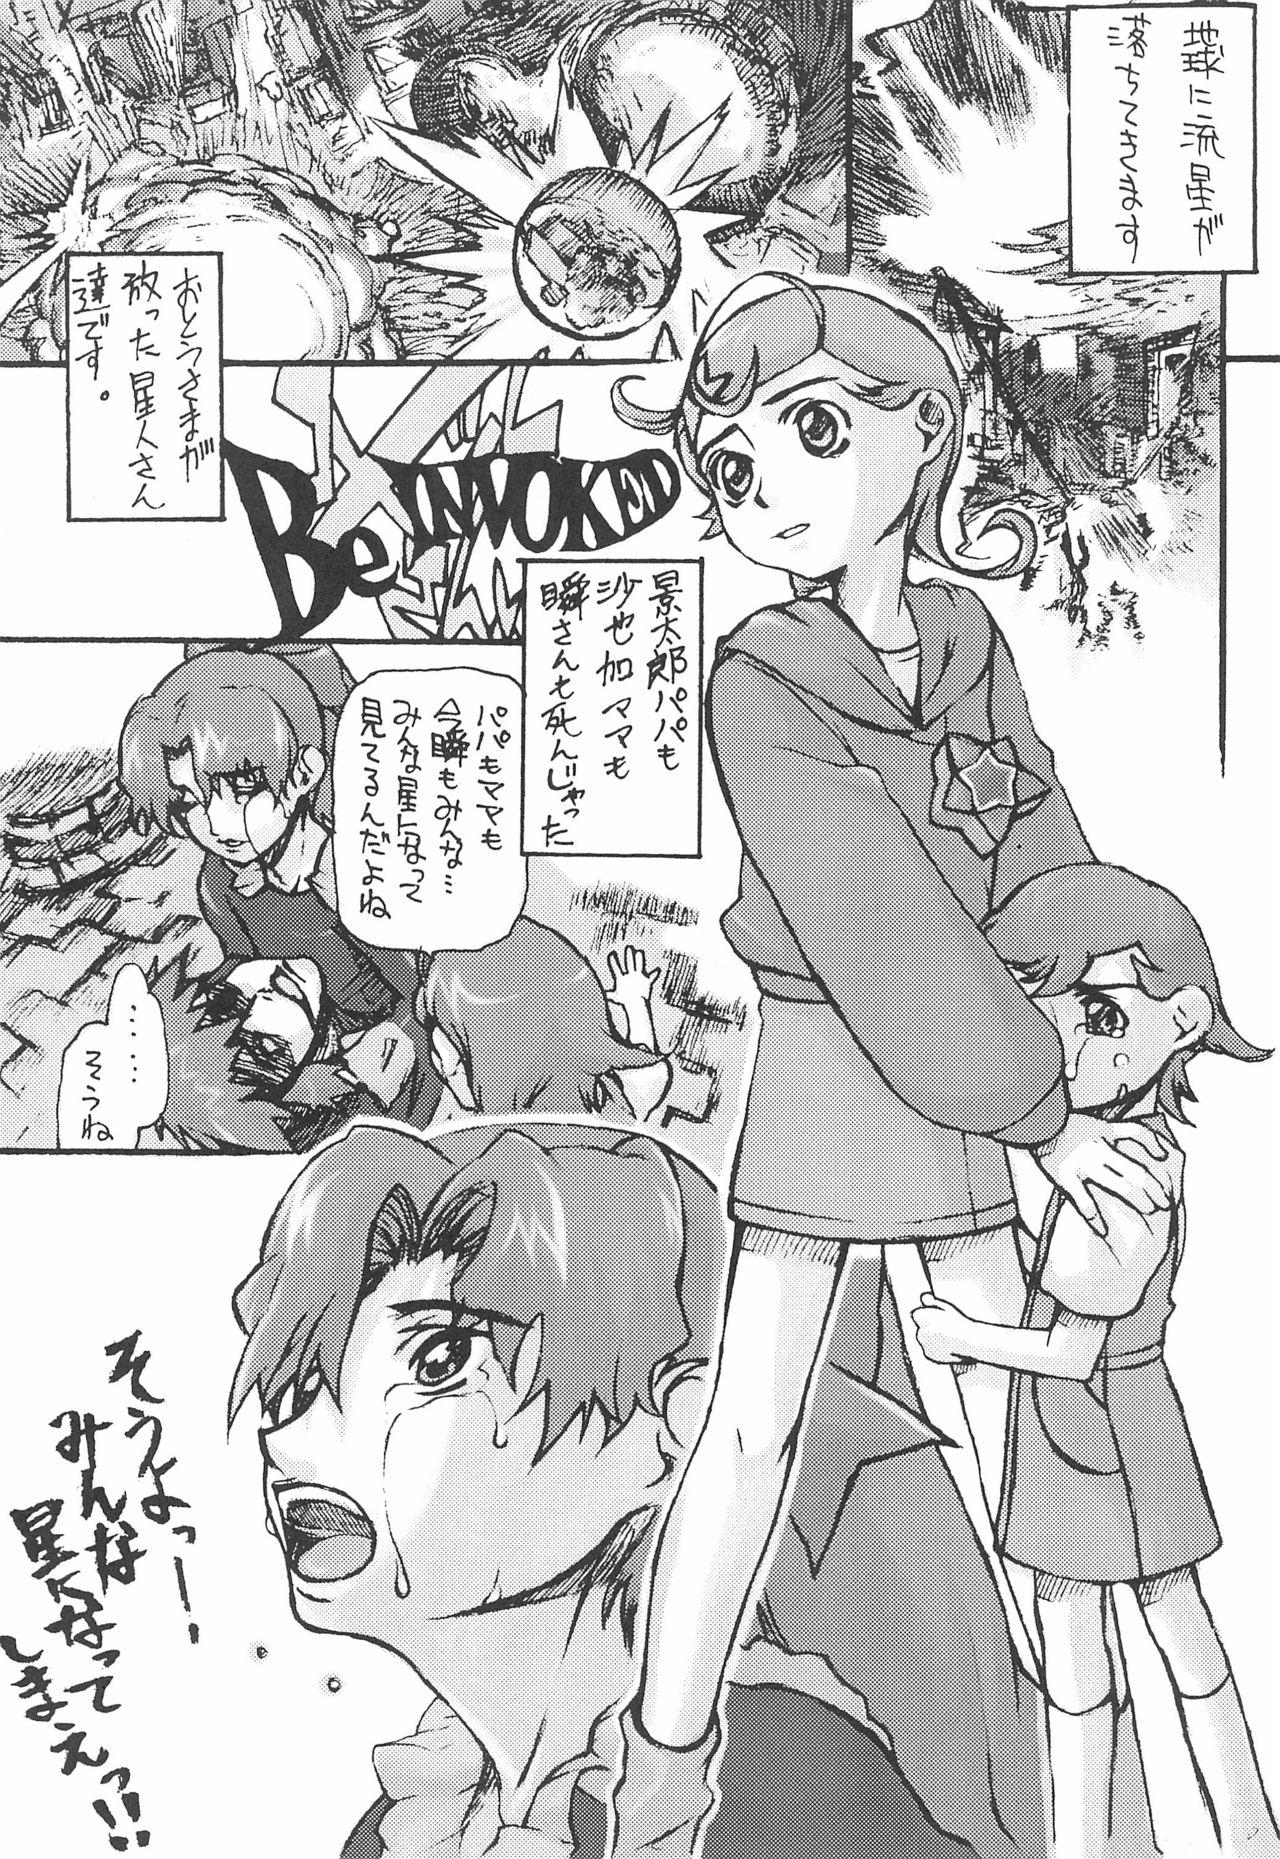 Casero Comet-san Comical Comics - Cosmic baton girl comet san Orgasmo - Page 9